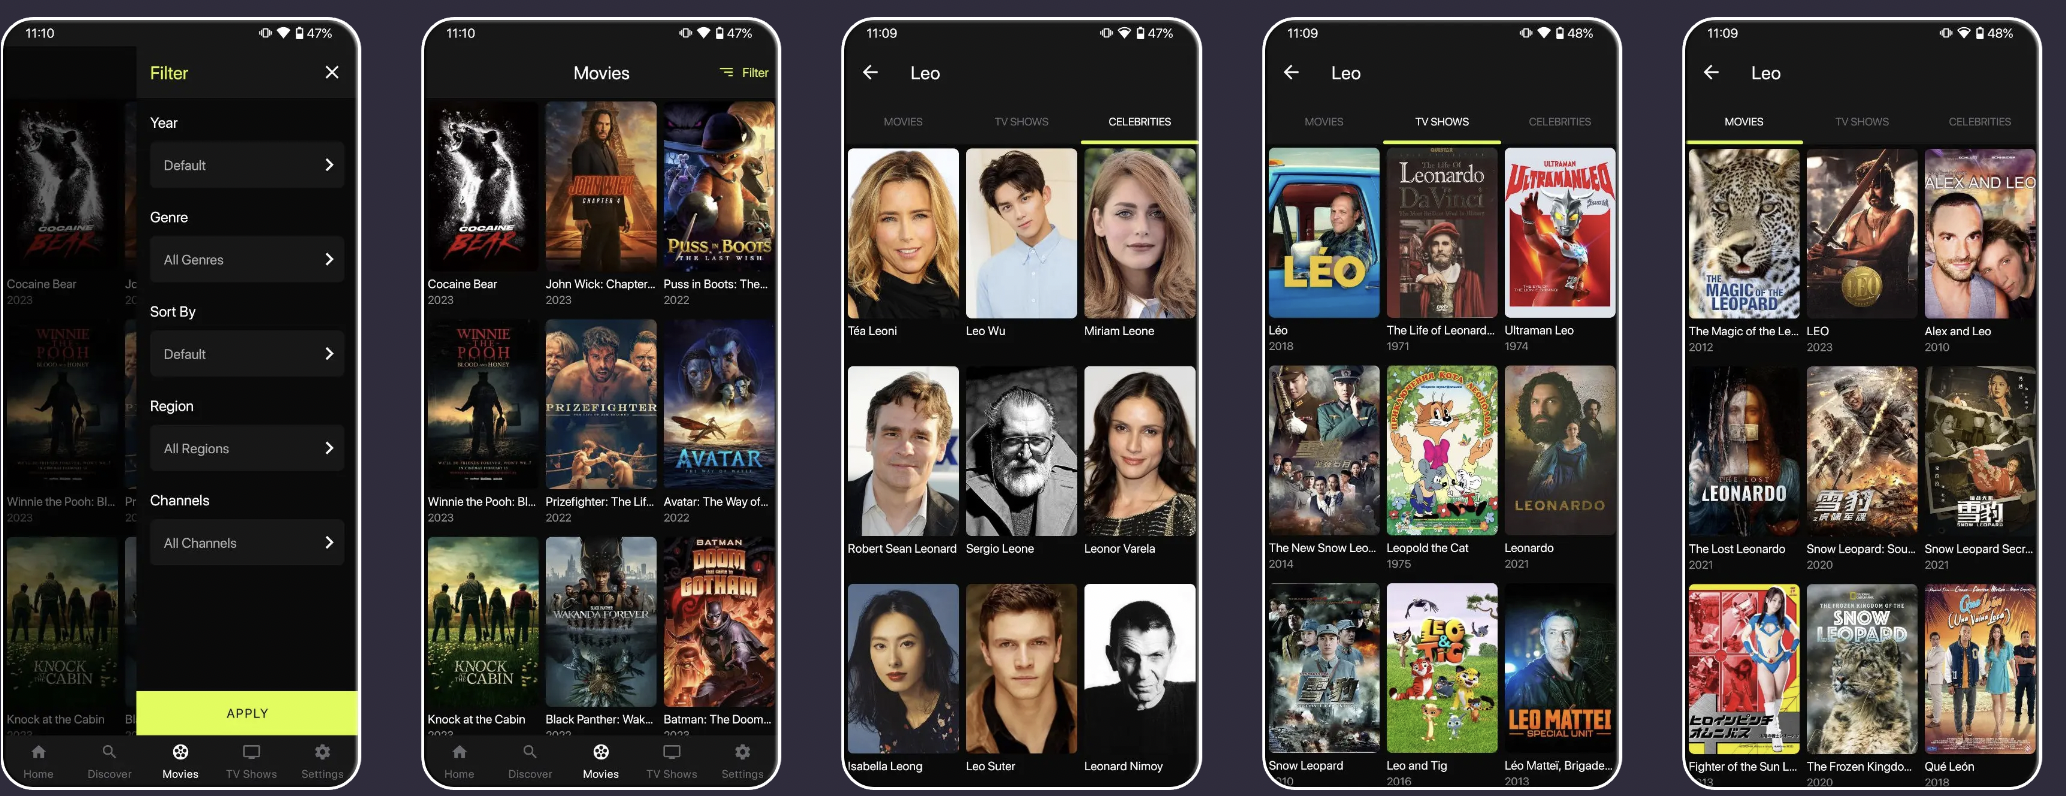 ZDBox App Movies & TV Shows